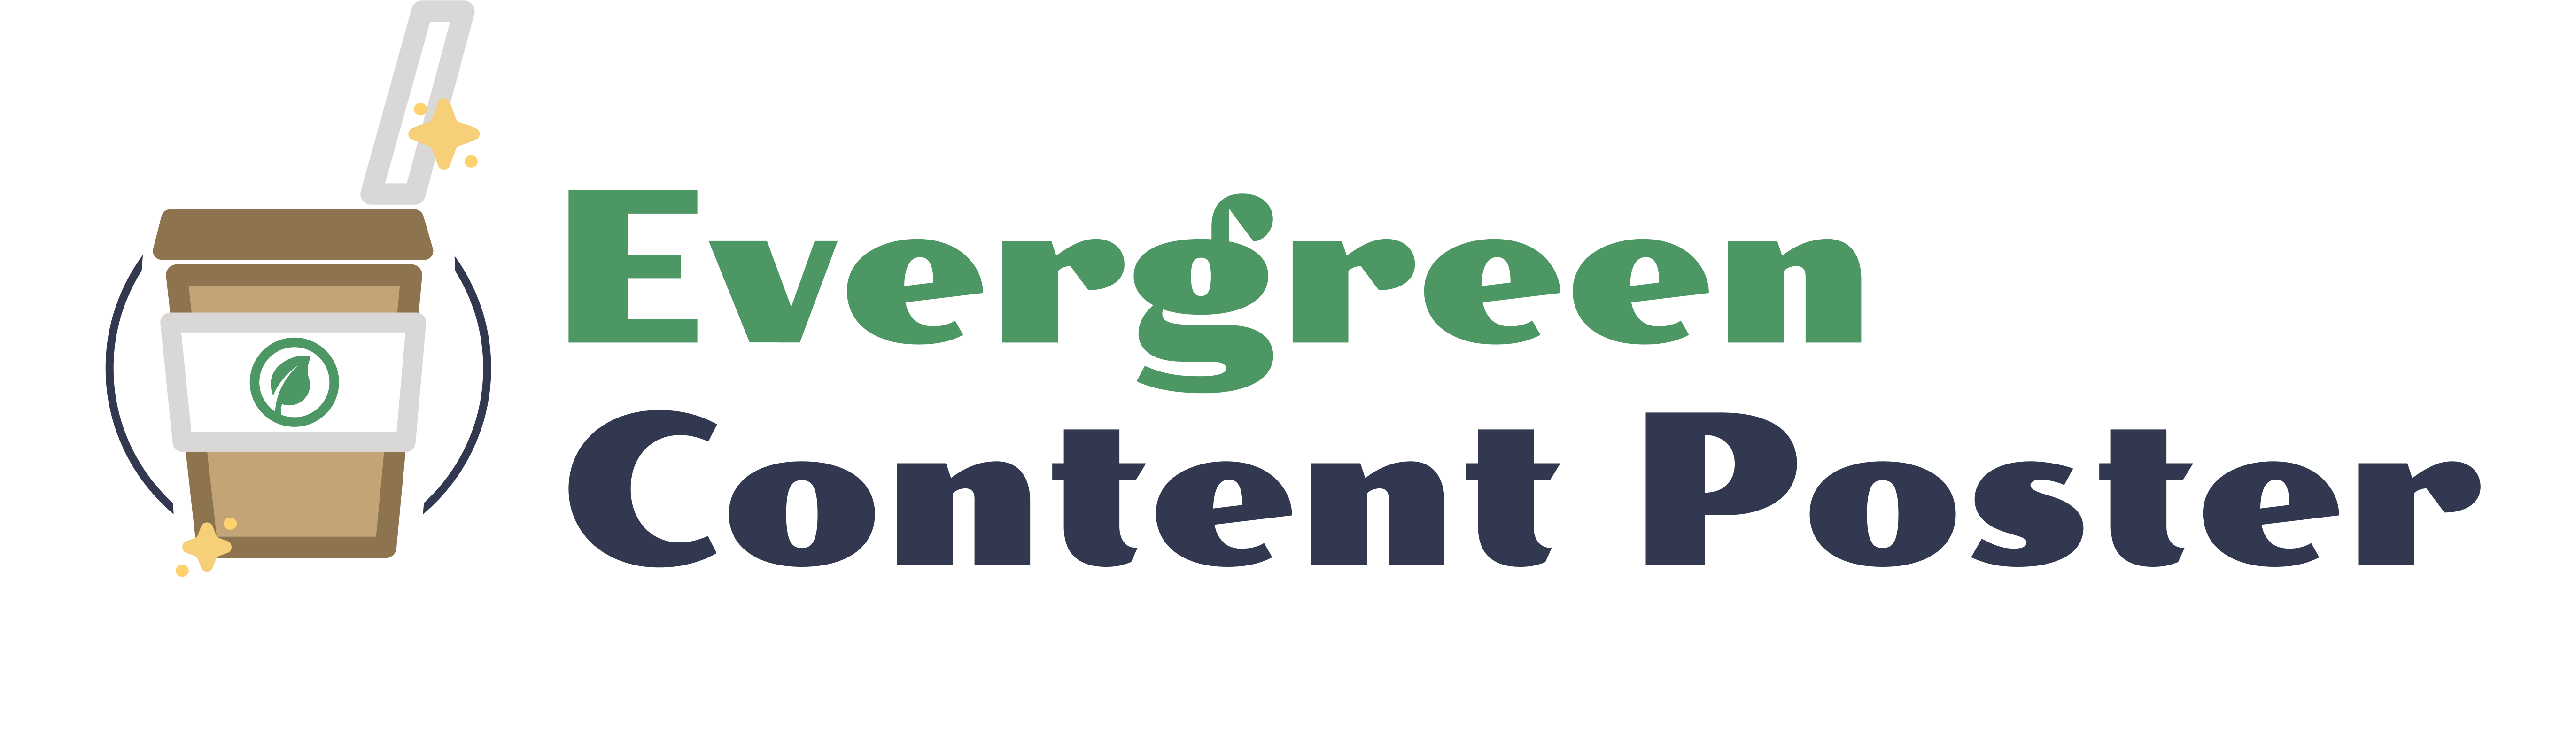 Evergreen Content Poster logo